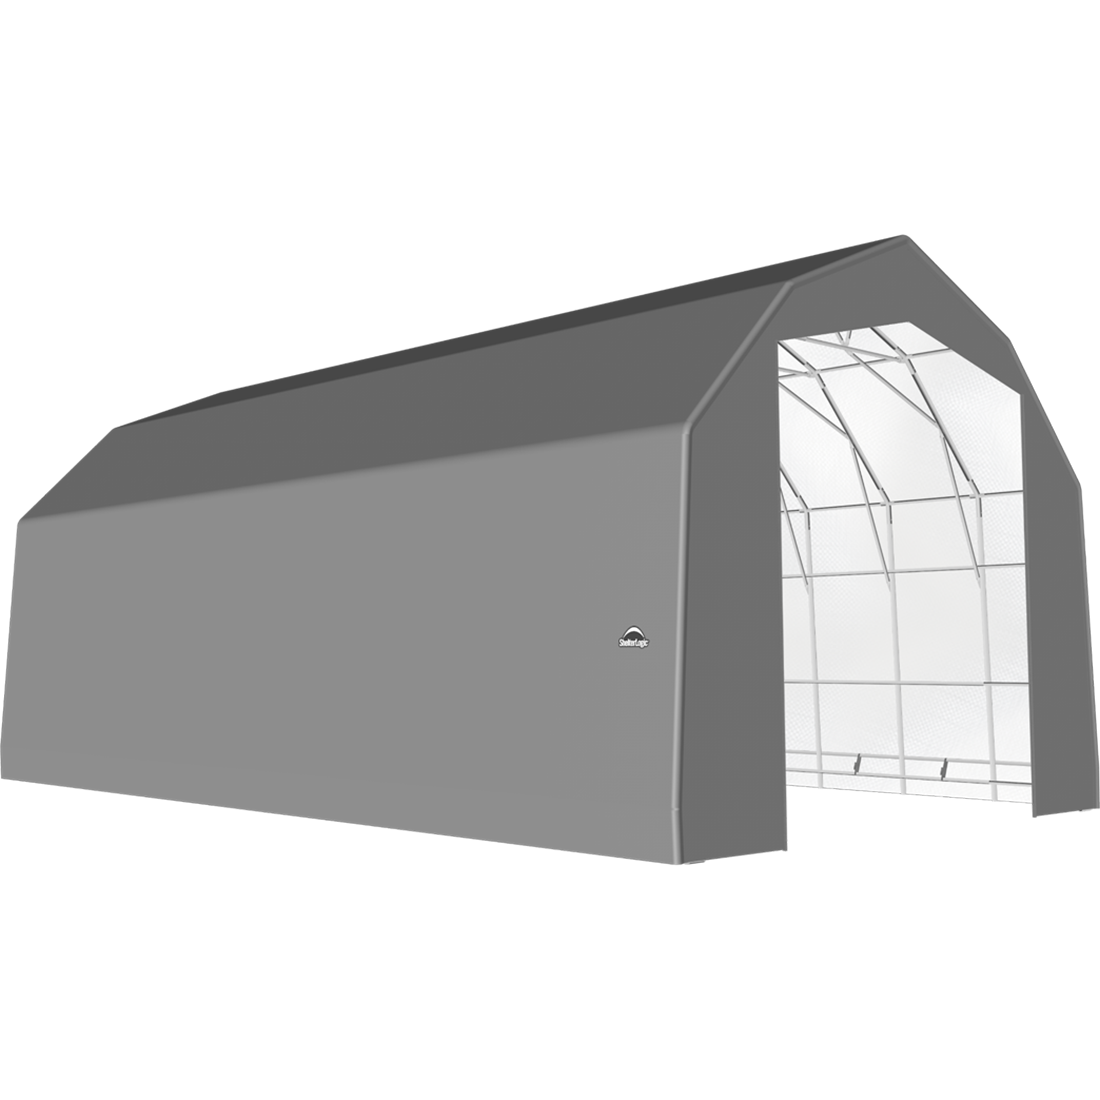 ShelterTech SP Series Barn Shelter, 25 ft. x 40 ft. x 20 ft. Heavy Duty PVC 14.5 oz. Gray